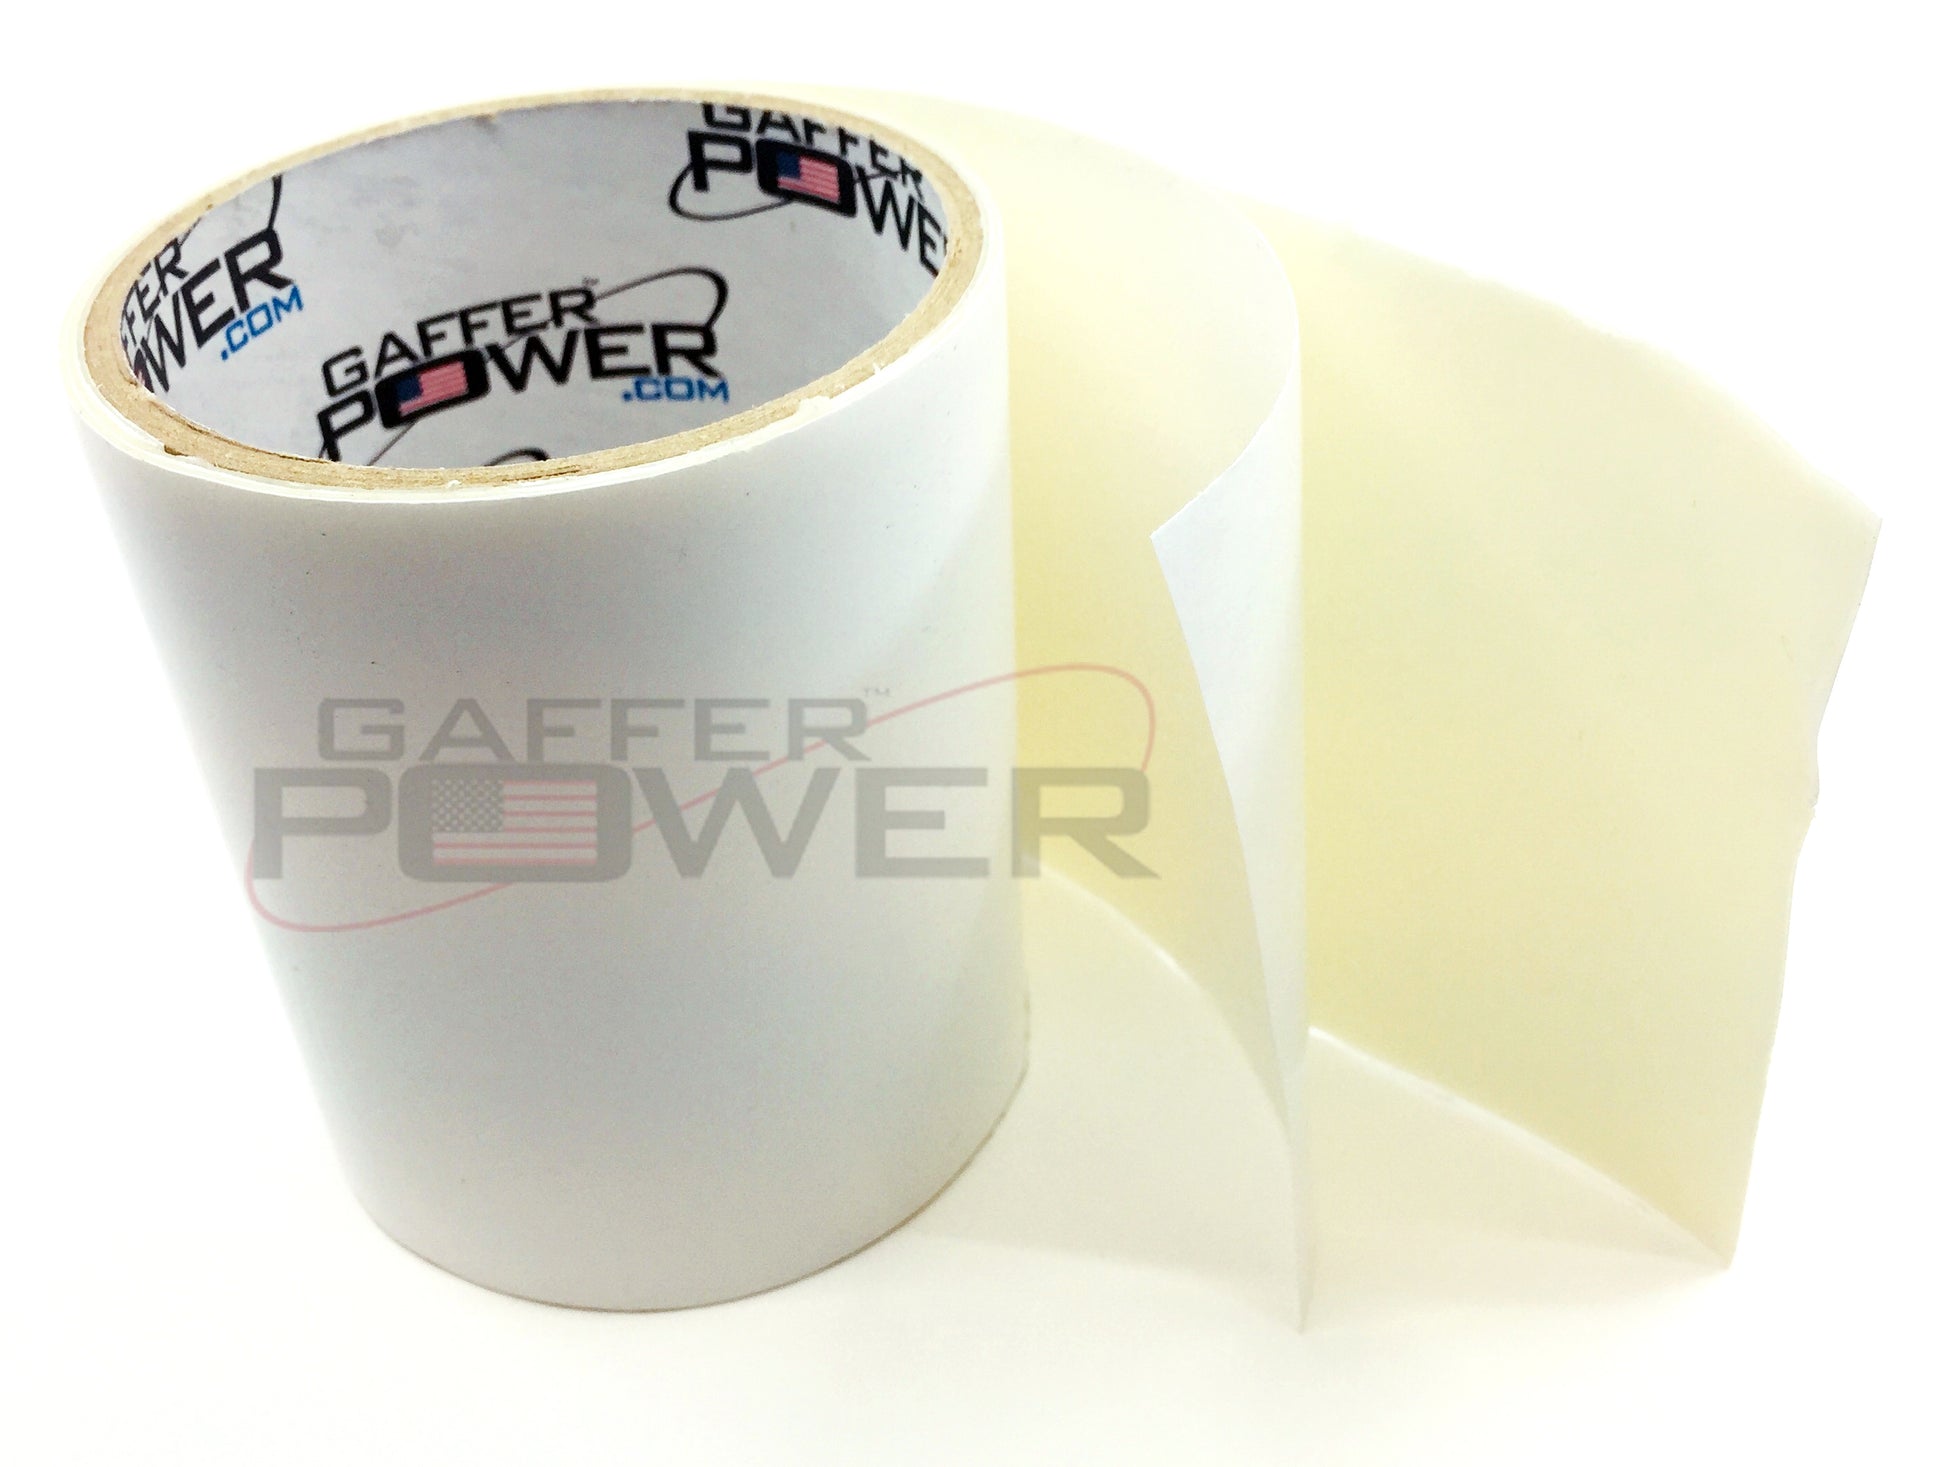 Easy-Tear Polyethylene Tape - UV Resistant, 2 x 60 yds, White S